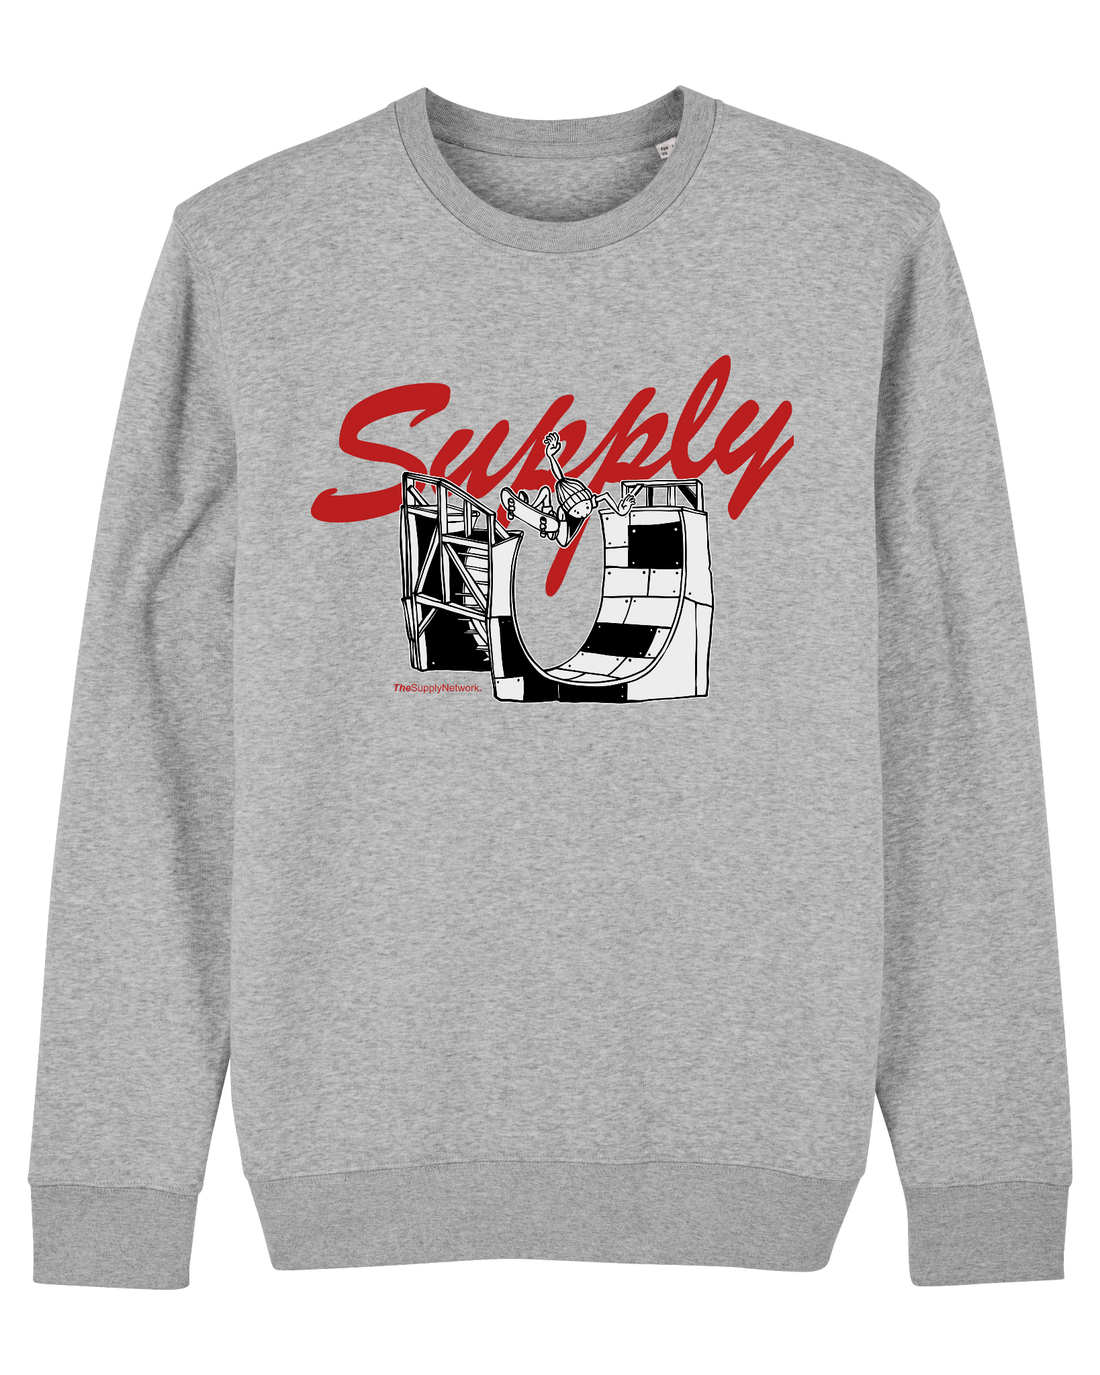 Grey Skater Sweatshirt, Skate Ramp Front Print